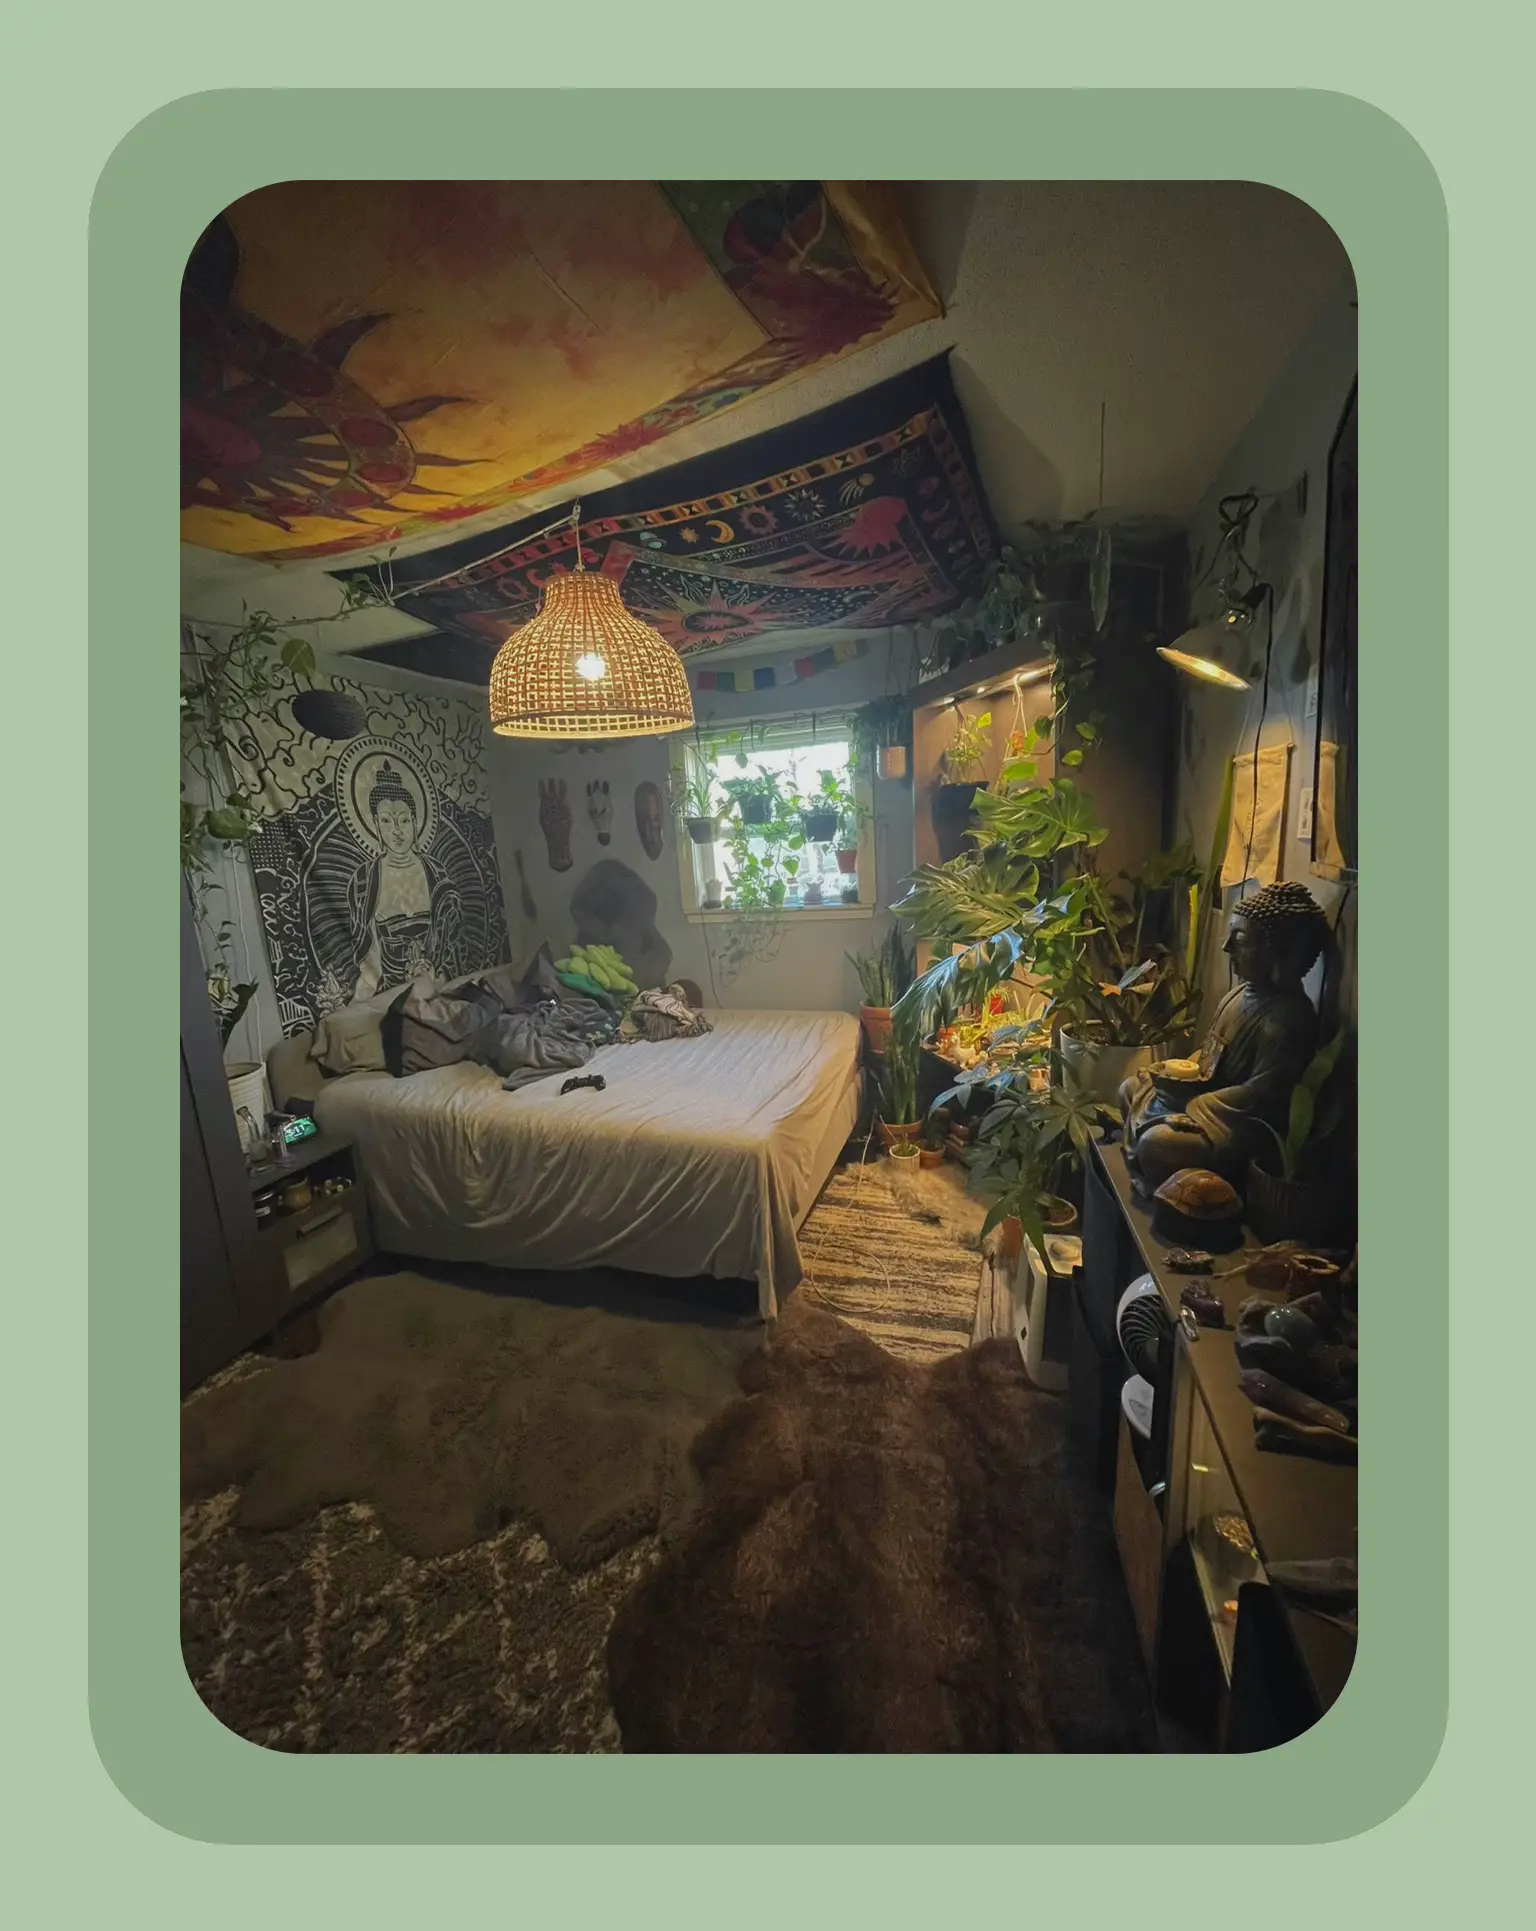  HK Studio Hippie Room Decor Aesthetic Posters - Y2K Room Decor  for Dorm, Teen Room 8 x 12 Pack 12: Posters & Prints